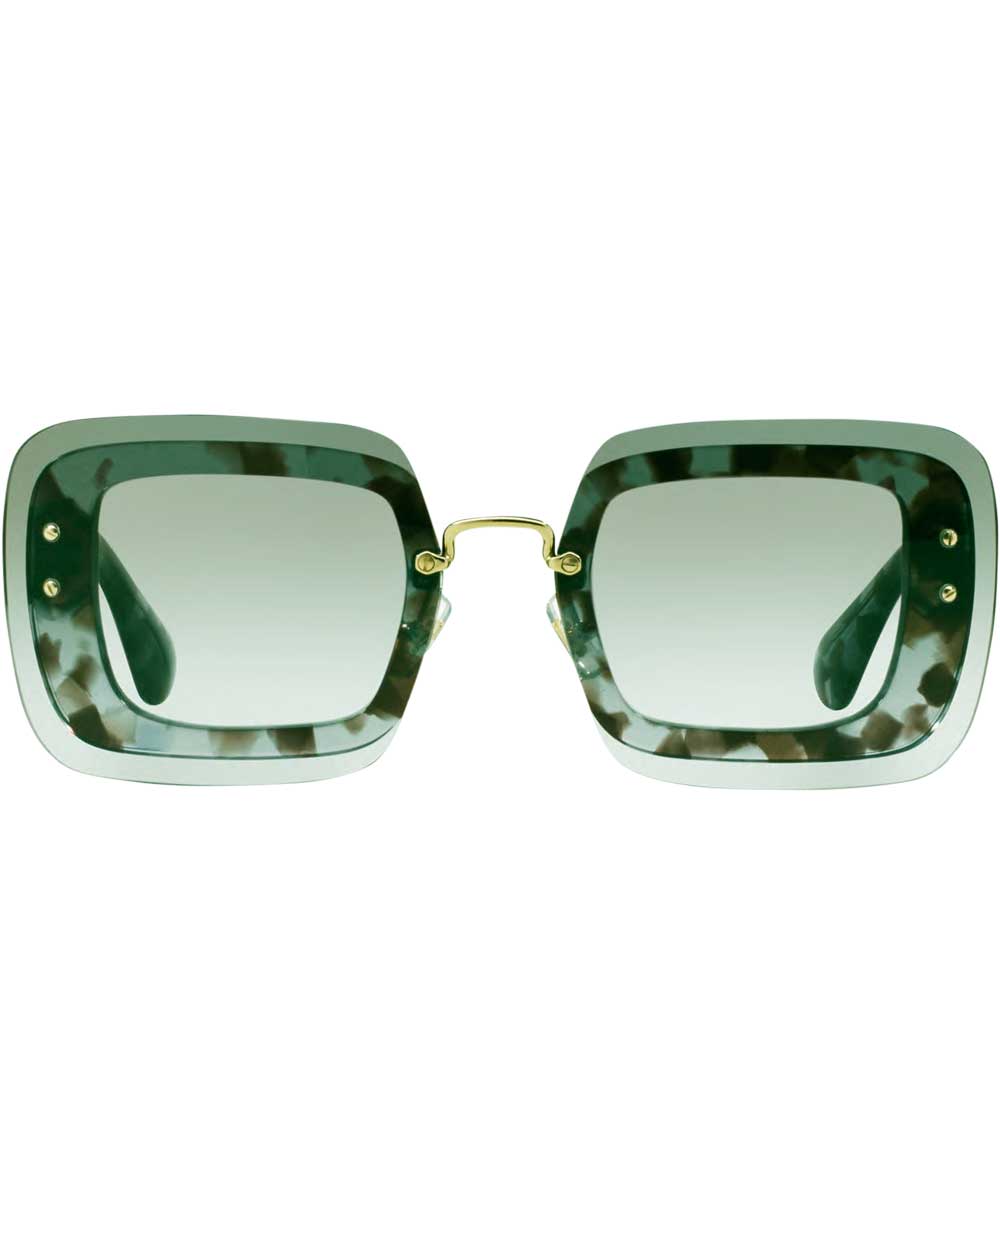 Miu Miu sunglasses, $397, from Sunglass Hut